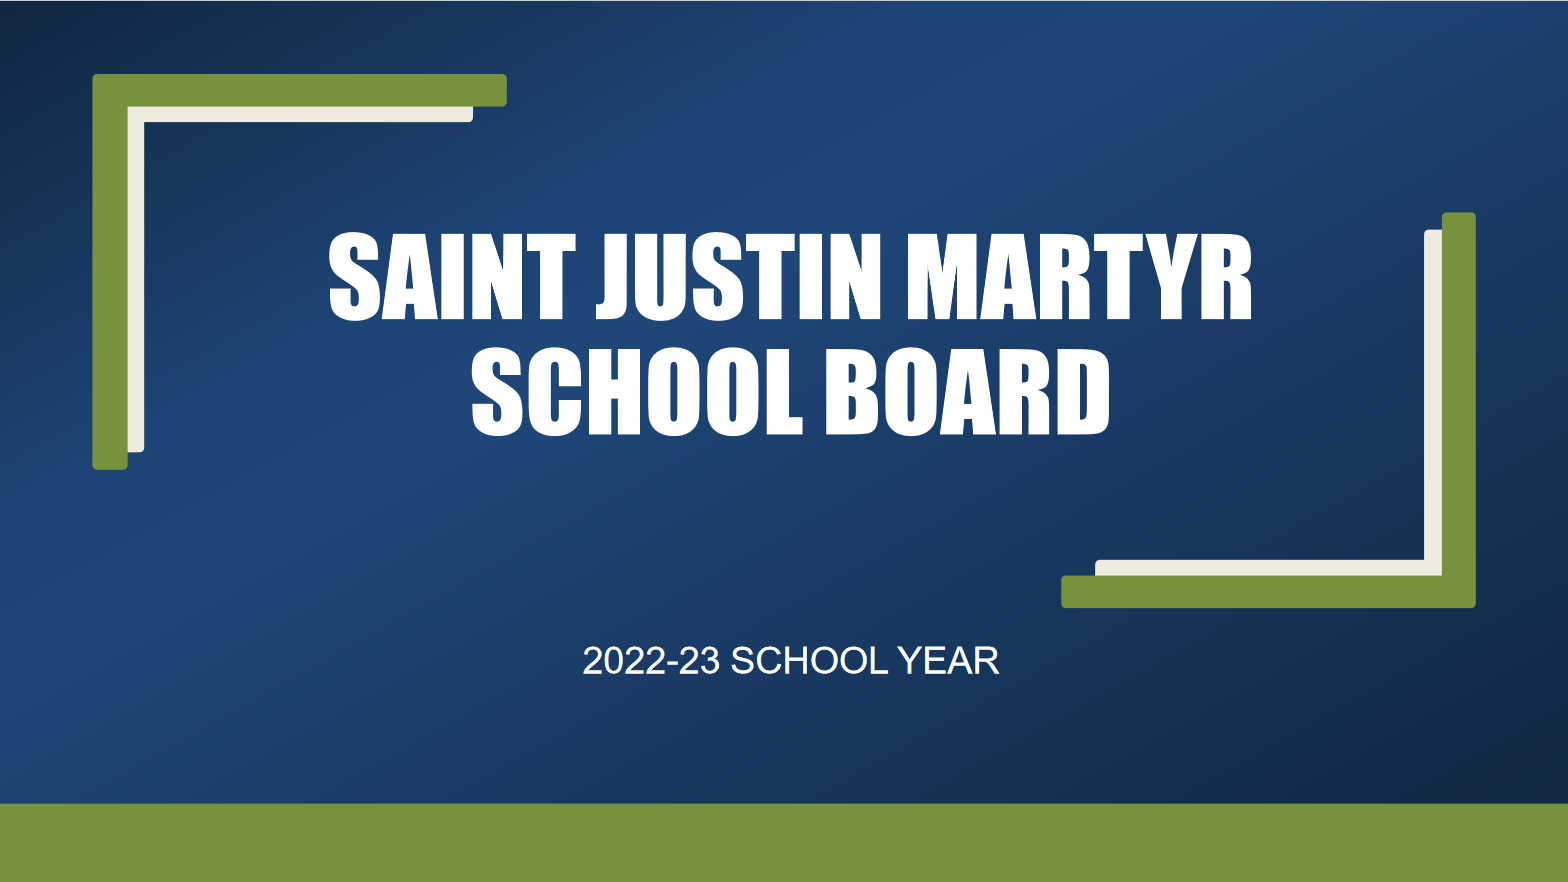 School Board for the 2022-2023 School Year